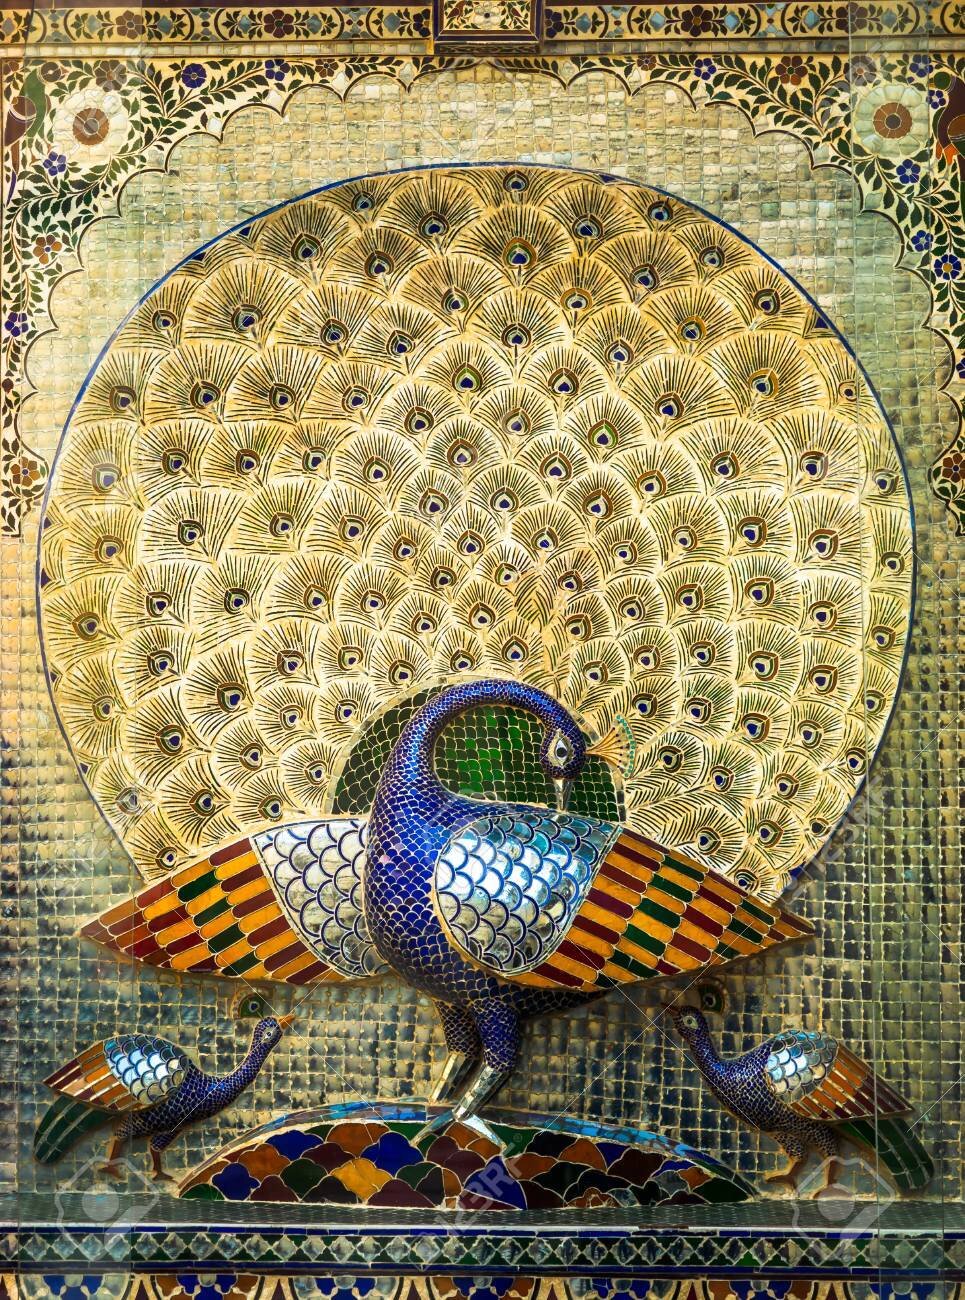 39367260-beautiful-glass-mosaics-of-peacocks-at-udaipur-city-palace-in-rajasthan-india-constructed-by-sajjan-.jpg